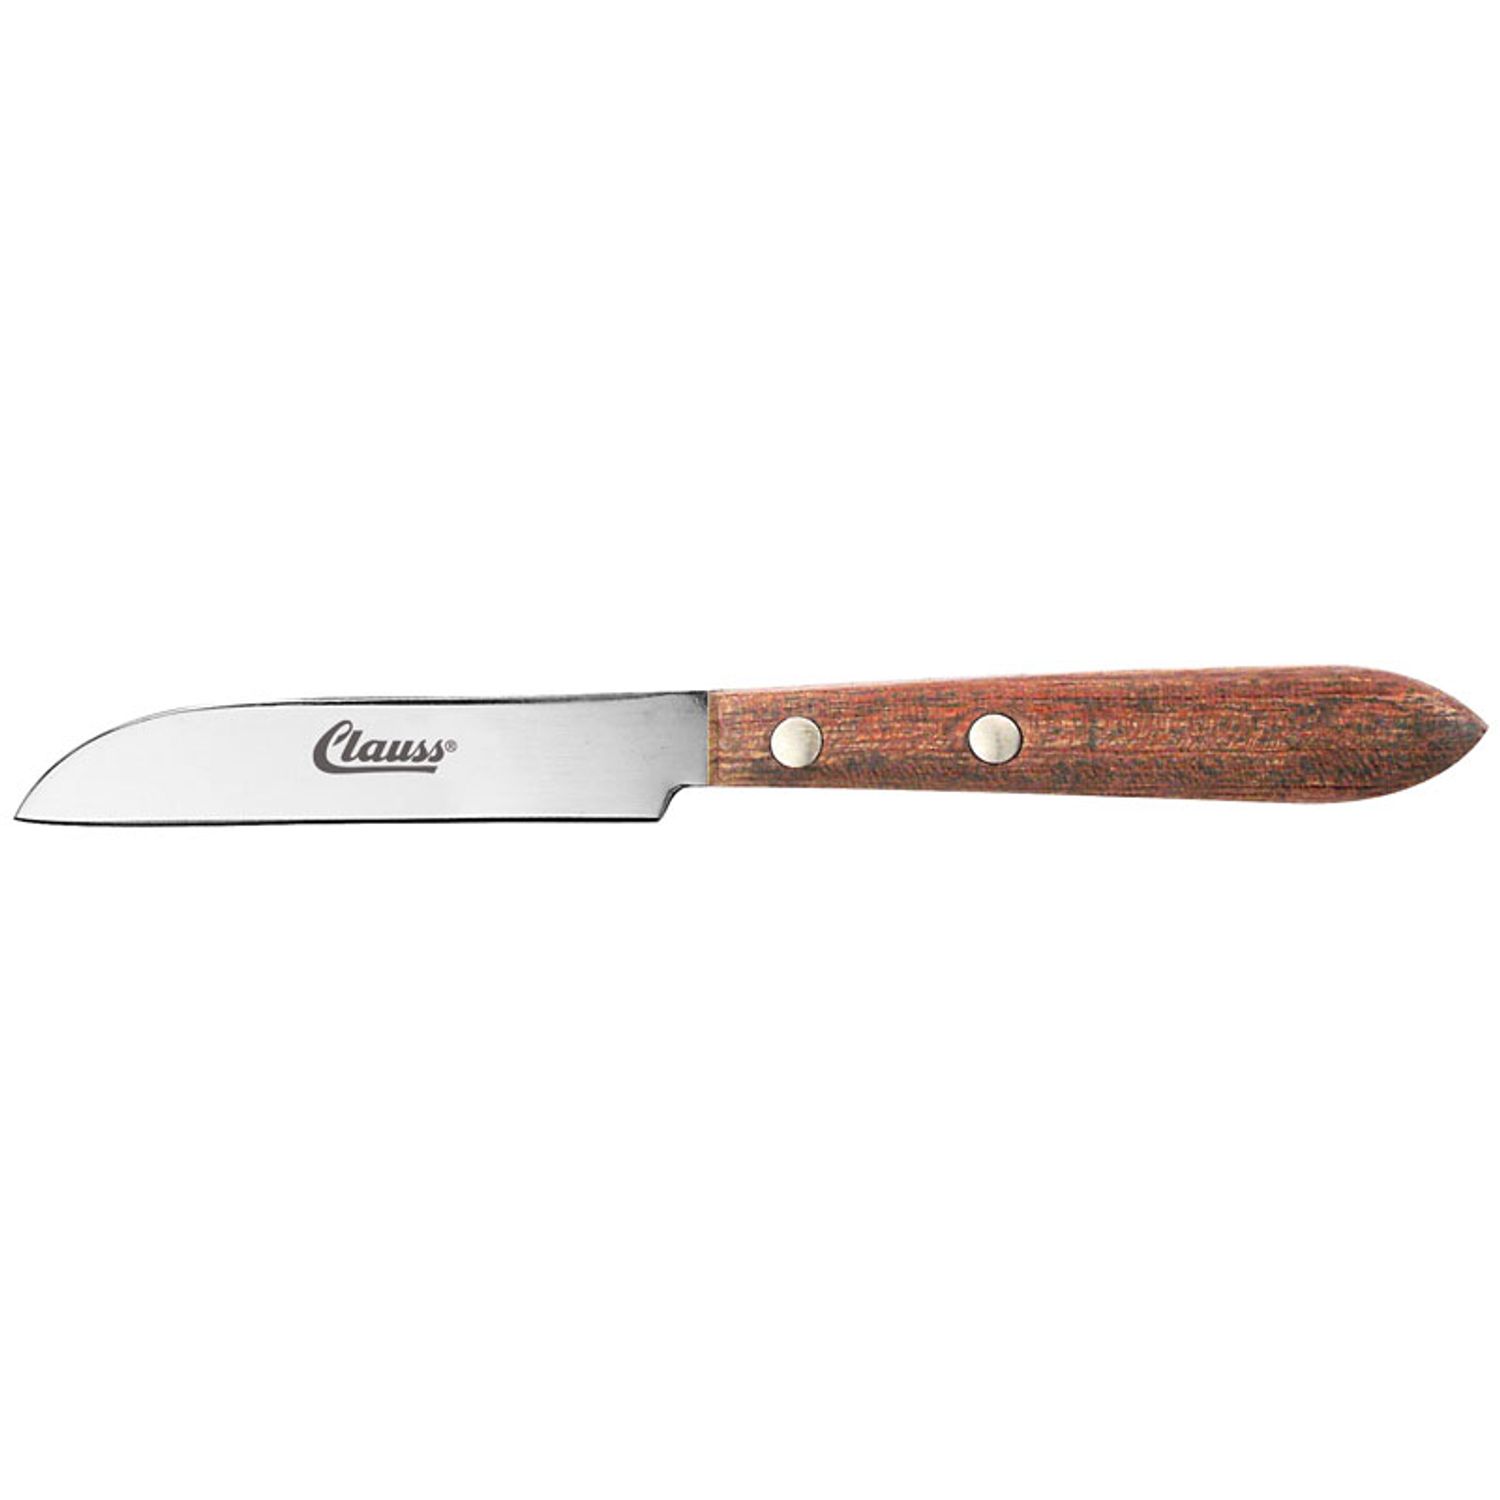 Clauss Florist Knife German Made Stainless Steel Straight Edge